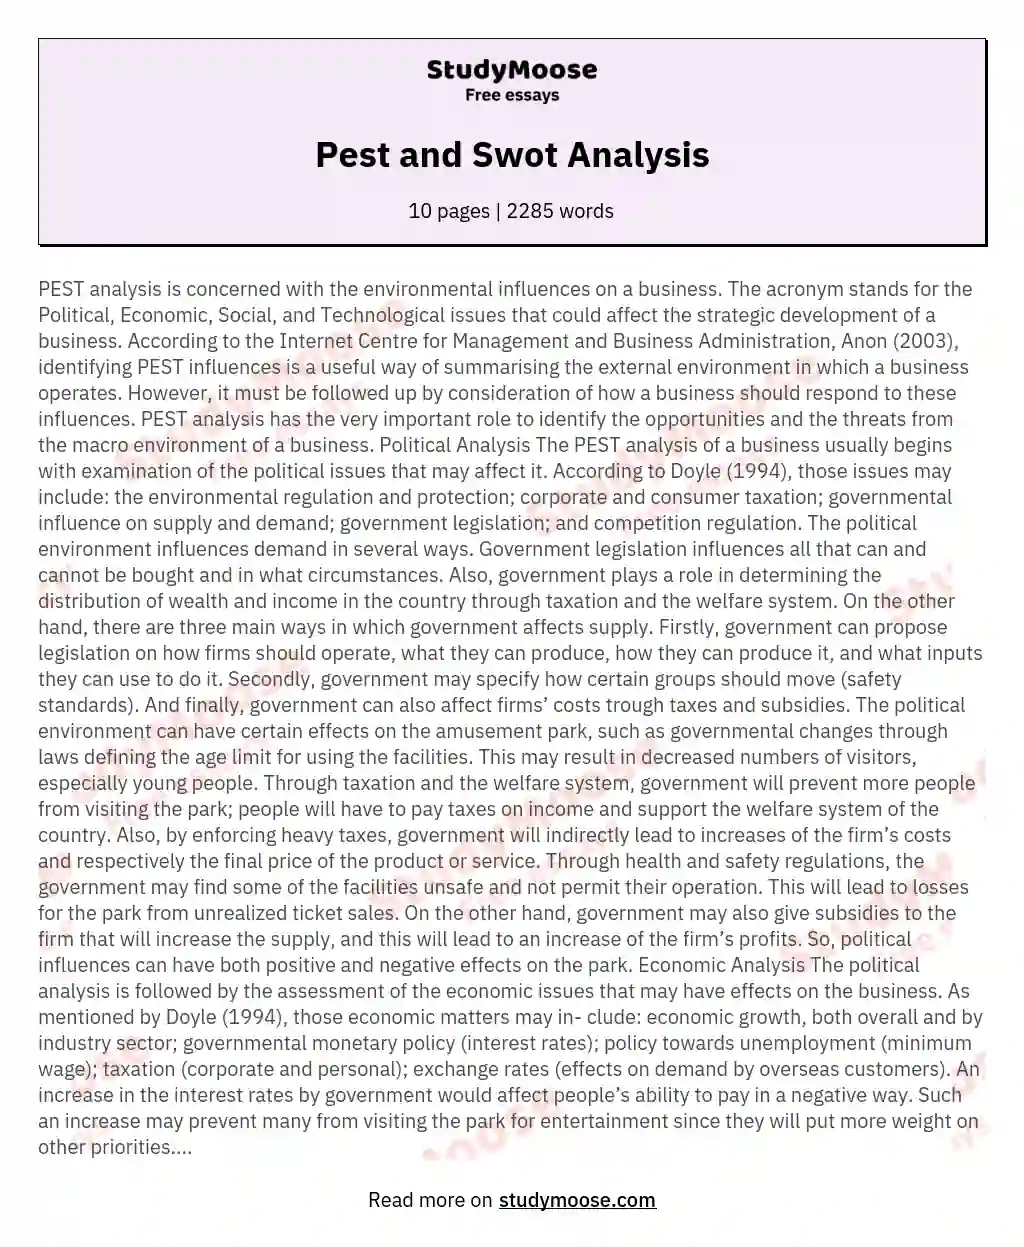 Pest and Swot Analysis